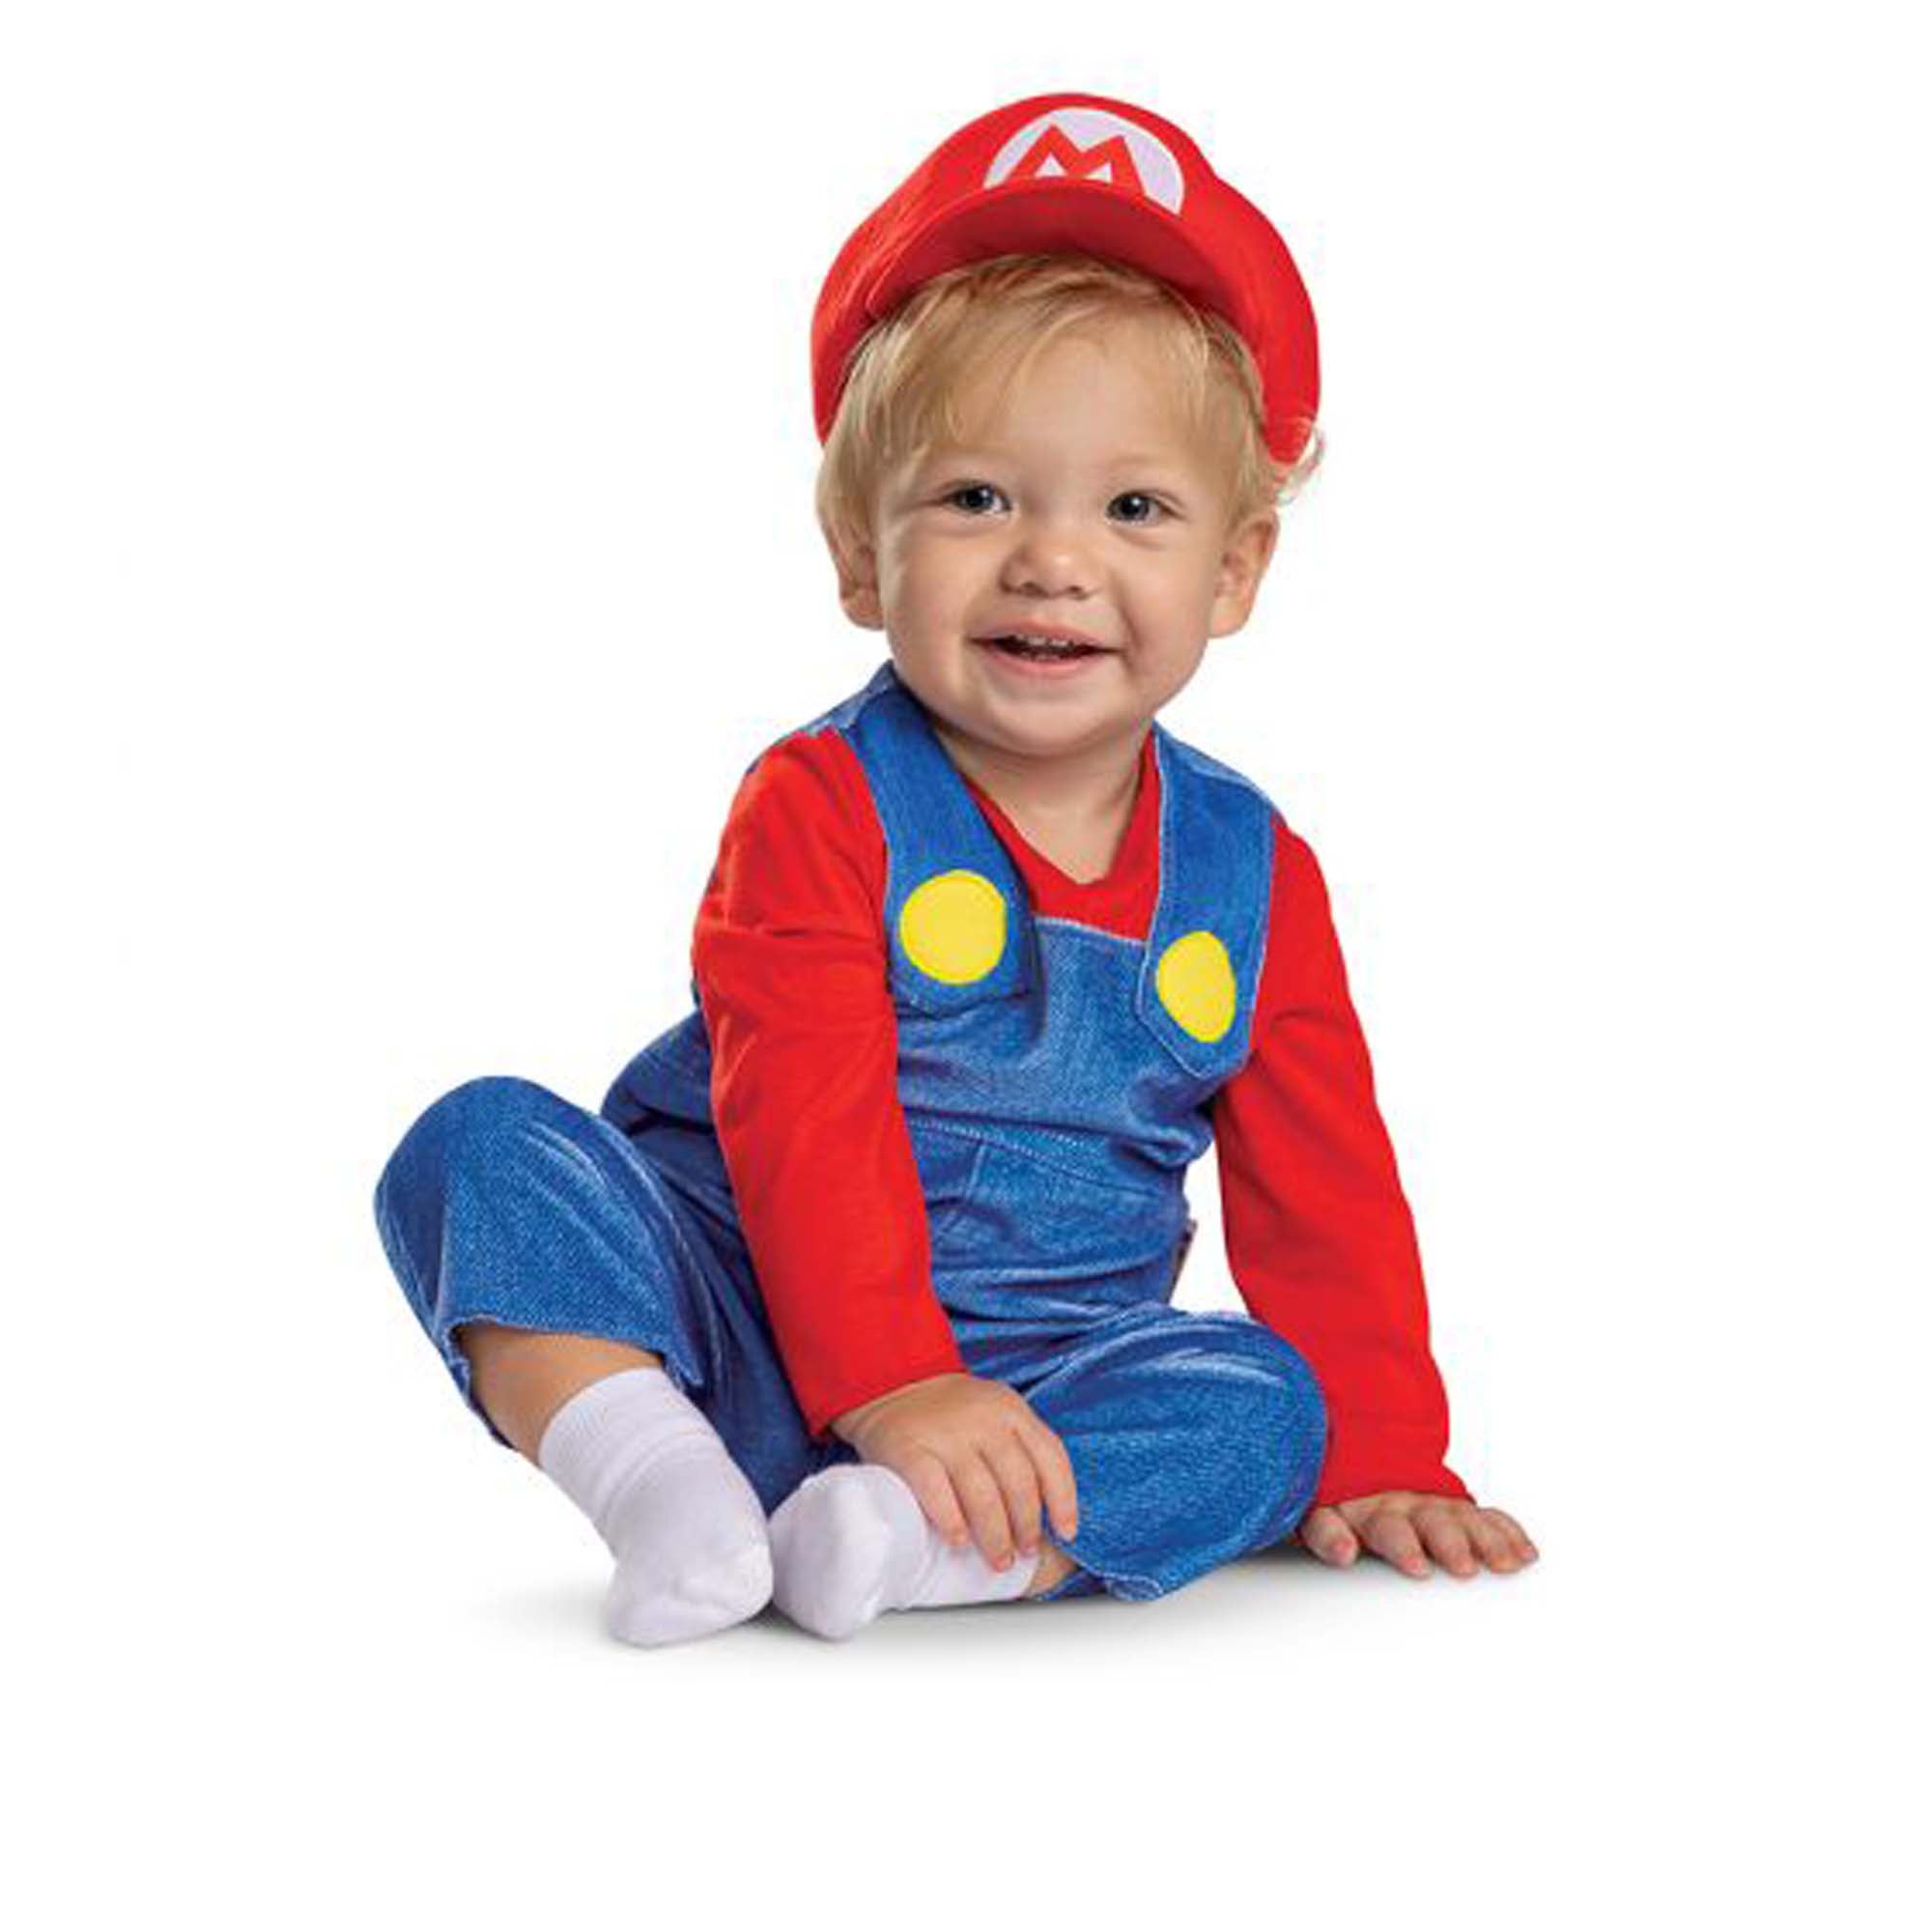 Déguisement Bébé Mario Bros